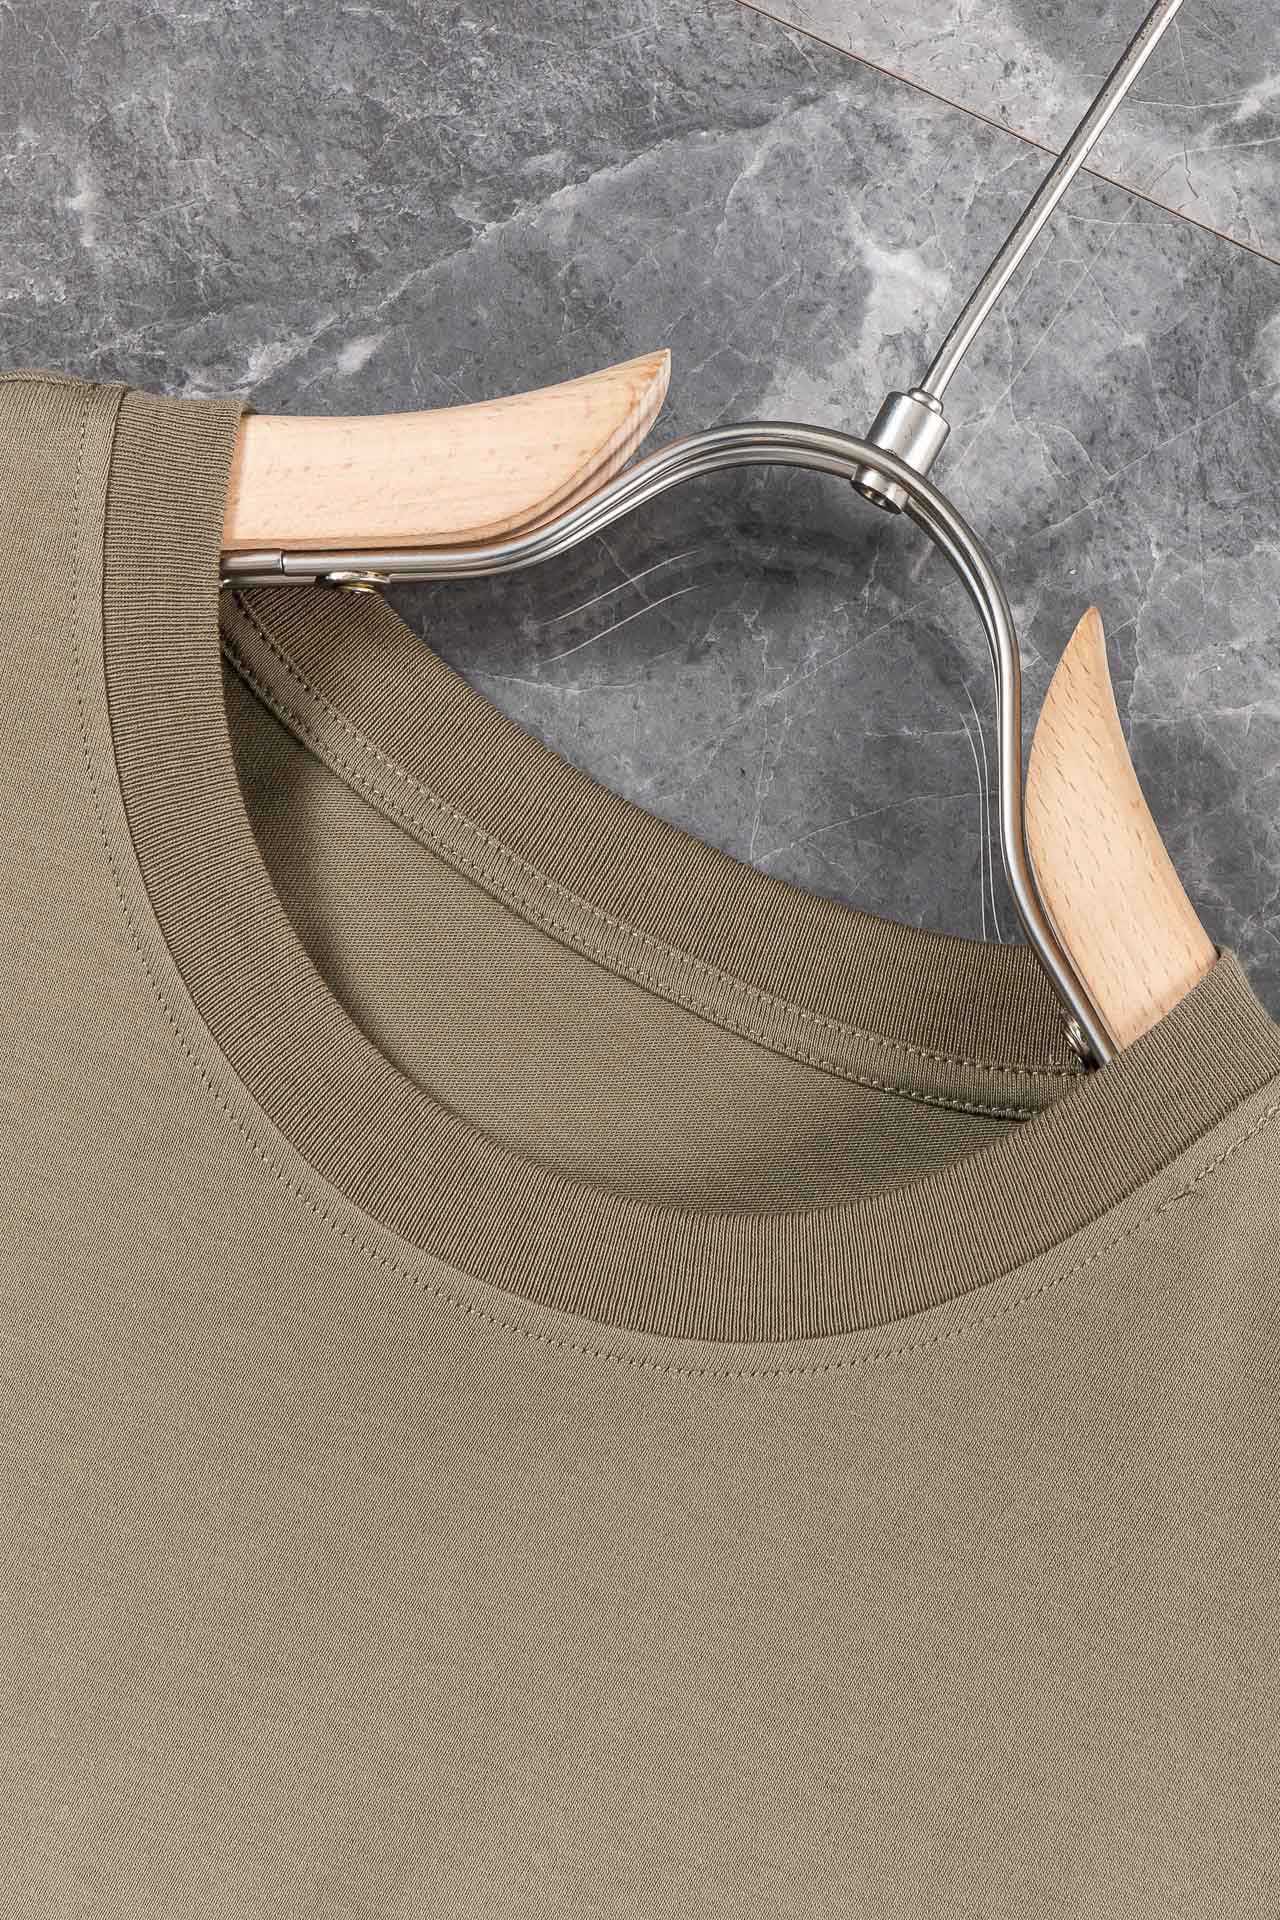 New#爱马仕*HERM*S*整体的设计颇具时尚感圆领短袖T恤设计采用袖子边缘嵌入撞色棉质螺纹装饰叠穿的